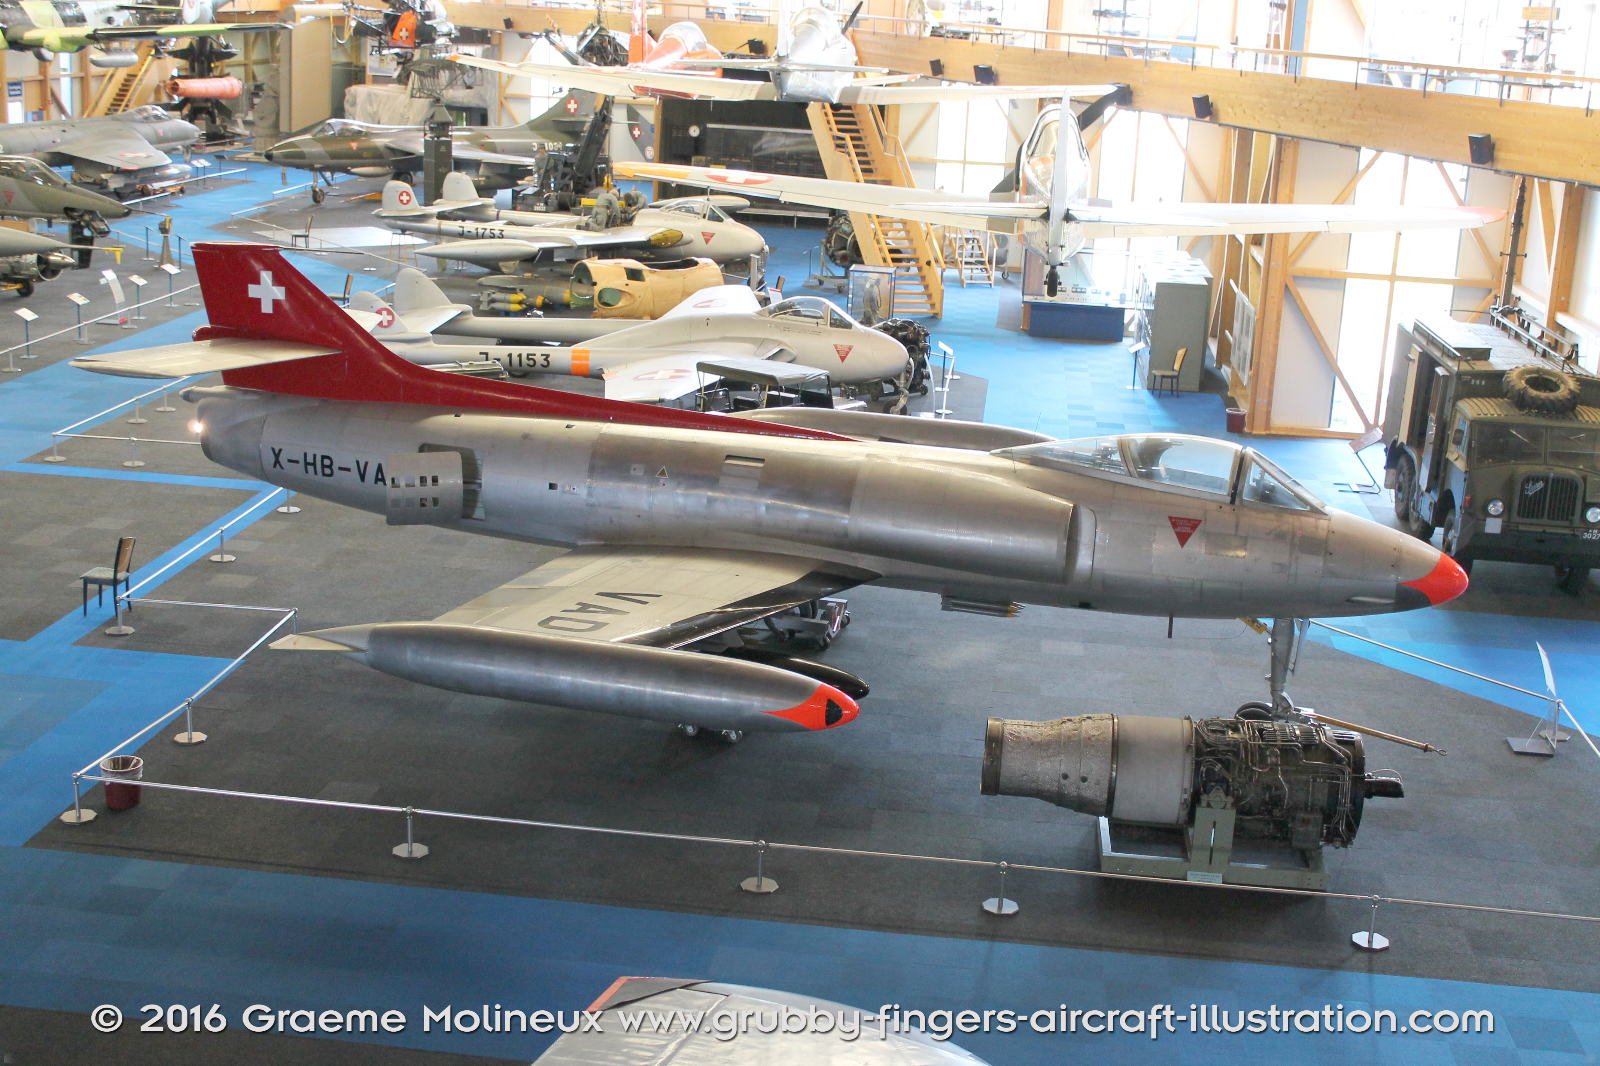 FFA_P-16_X-HB-VAD_Swiss_Air_Force_Museum_2015_13_GrubbyFingers